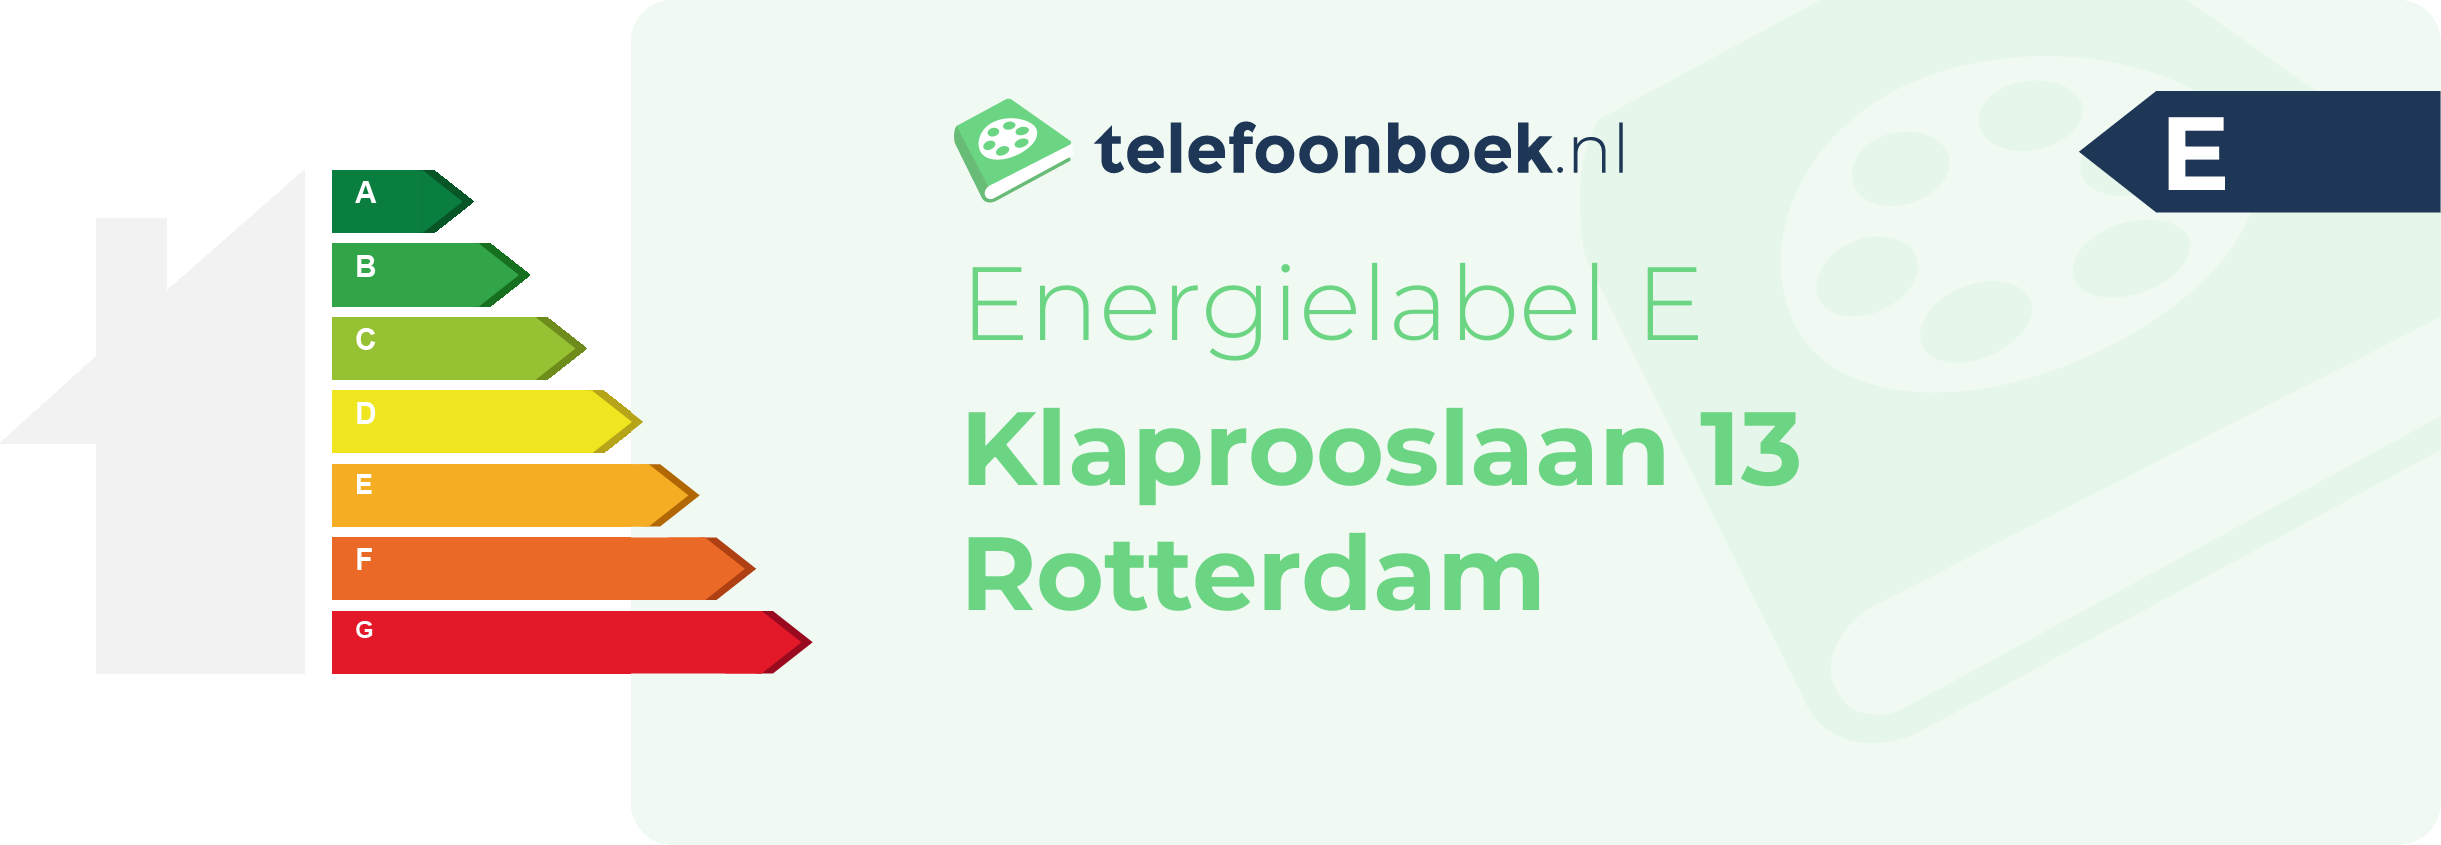 Energielabel Klaprooslaan 13 Rotterdam